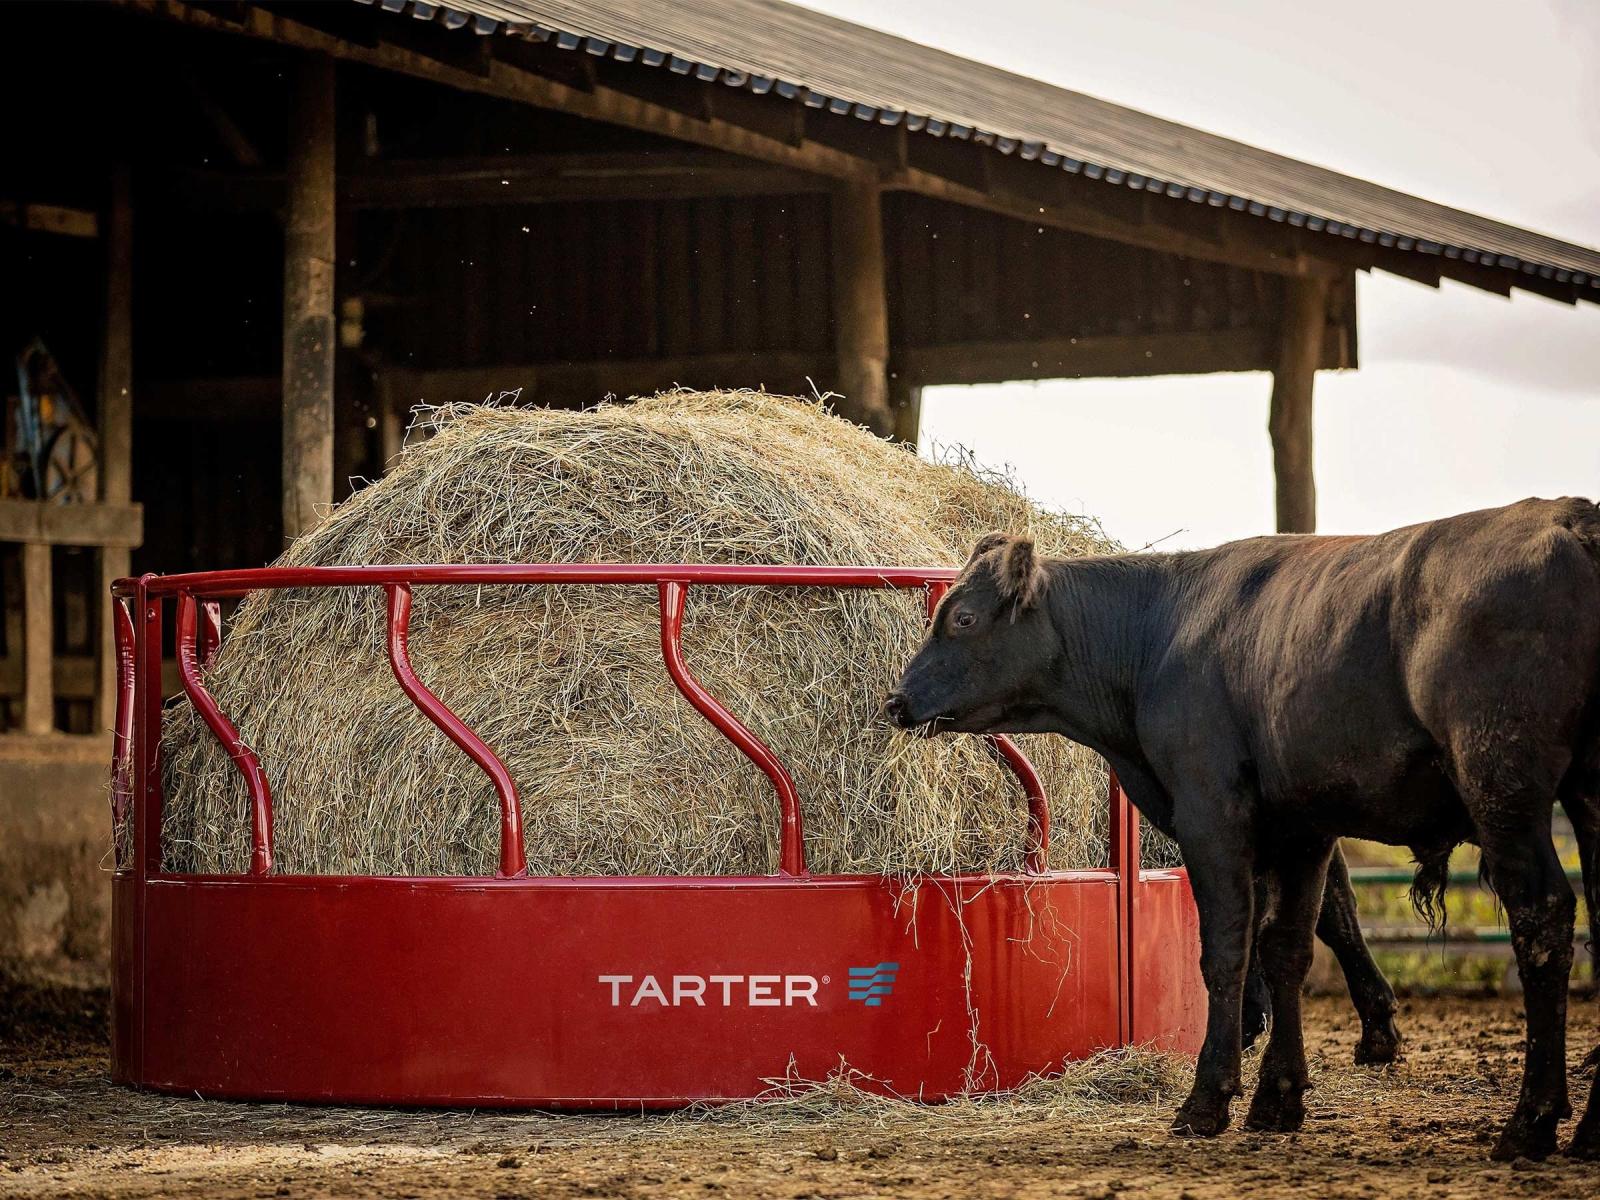 Tarter Titan Cattle Feeder with Hay Saver